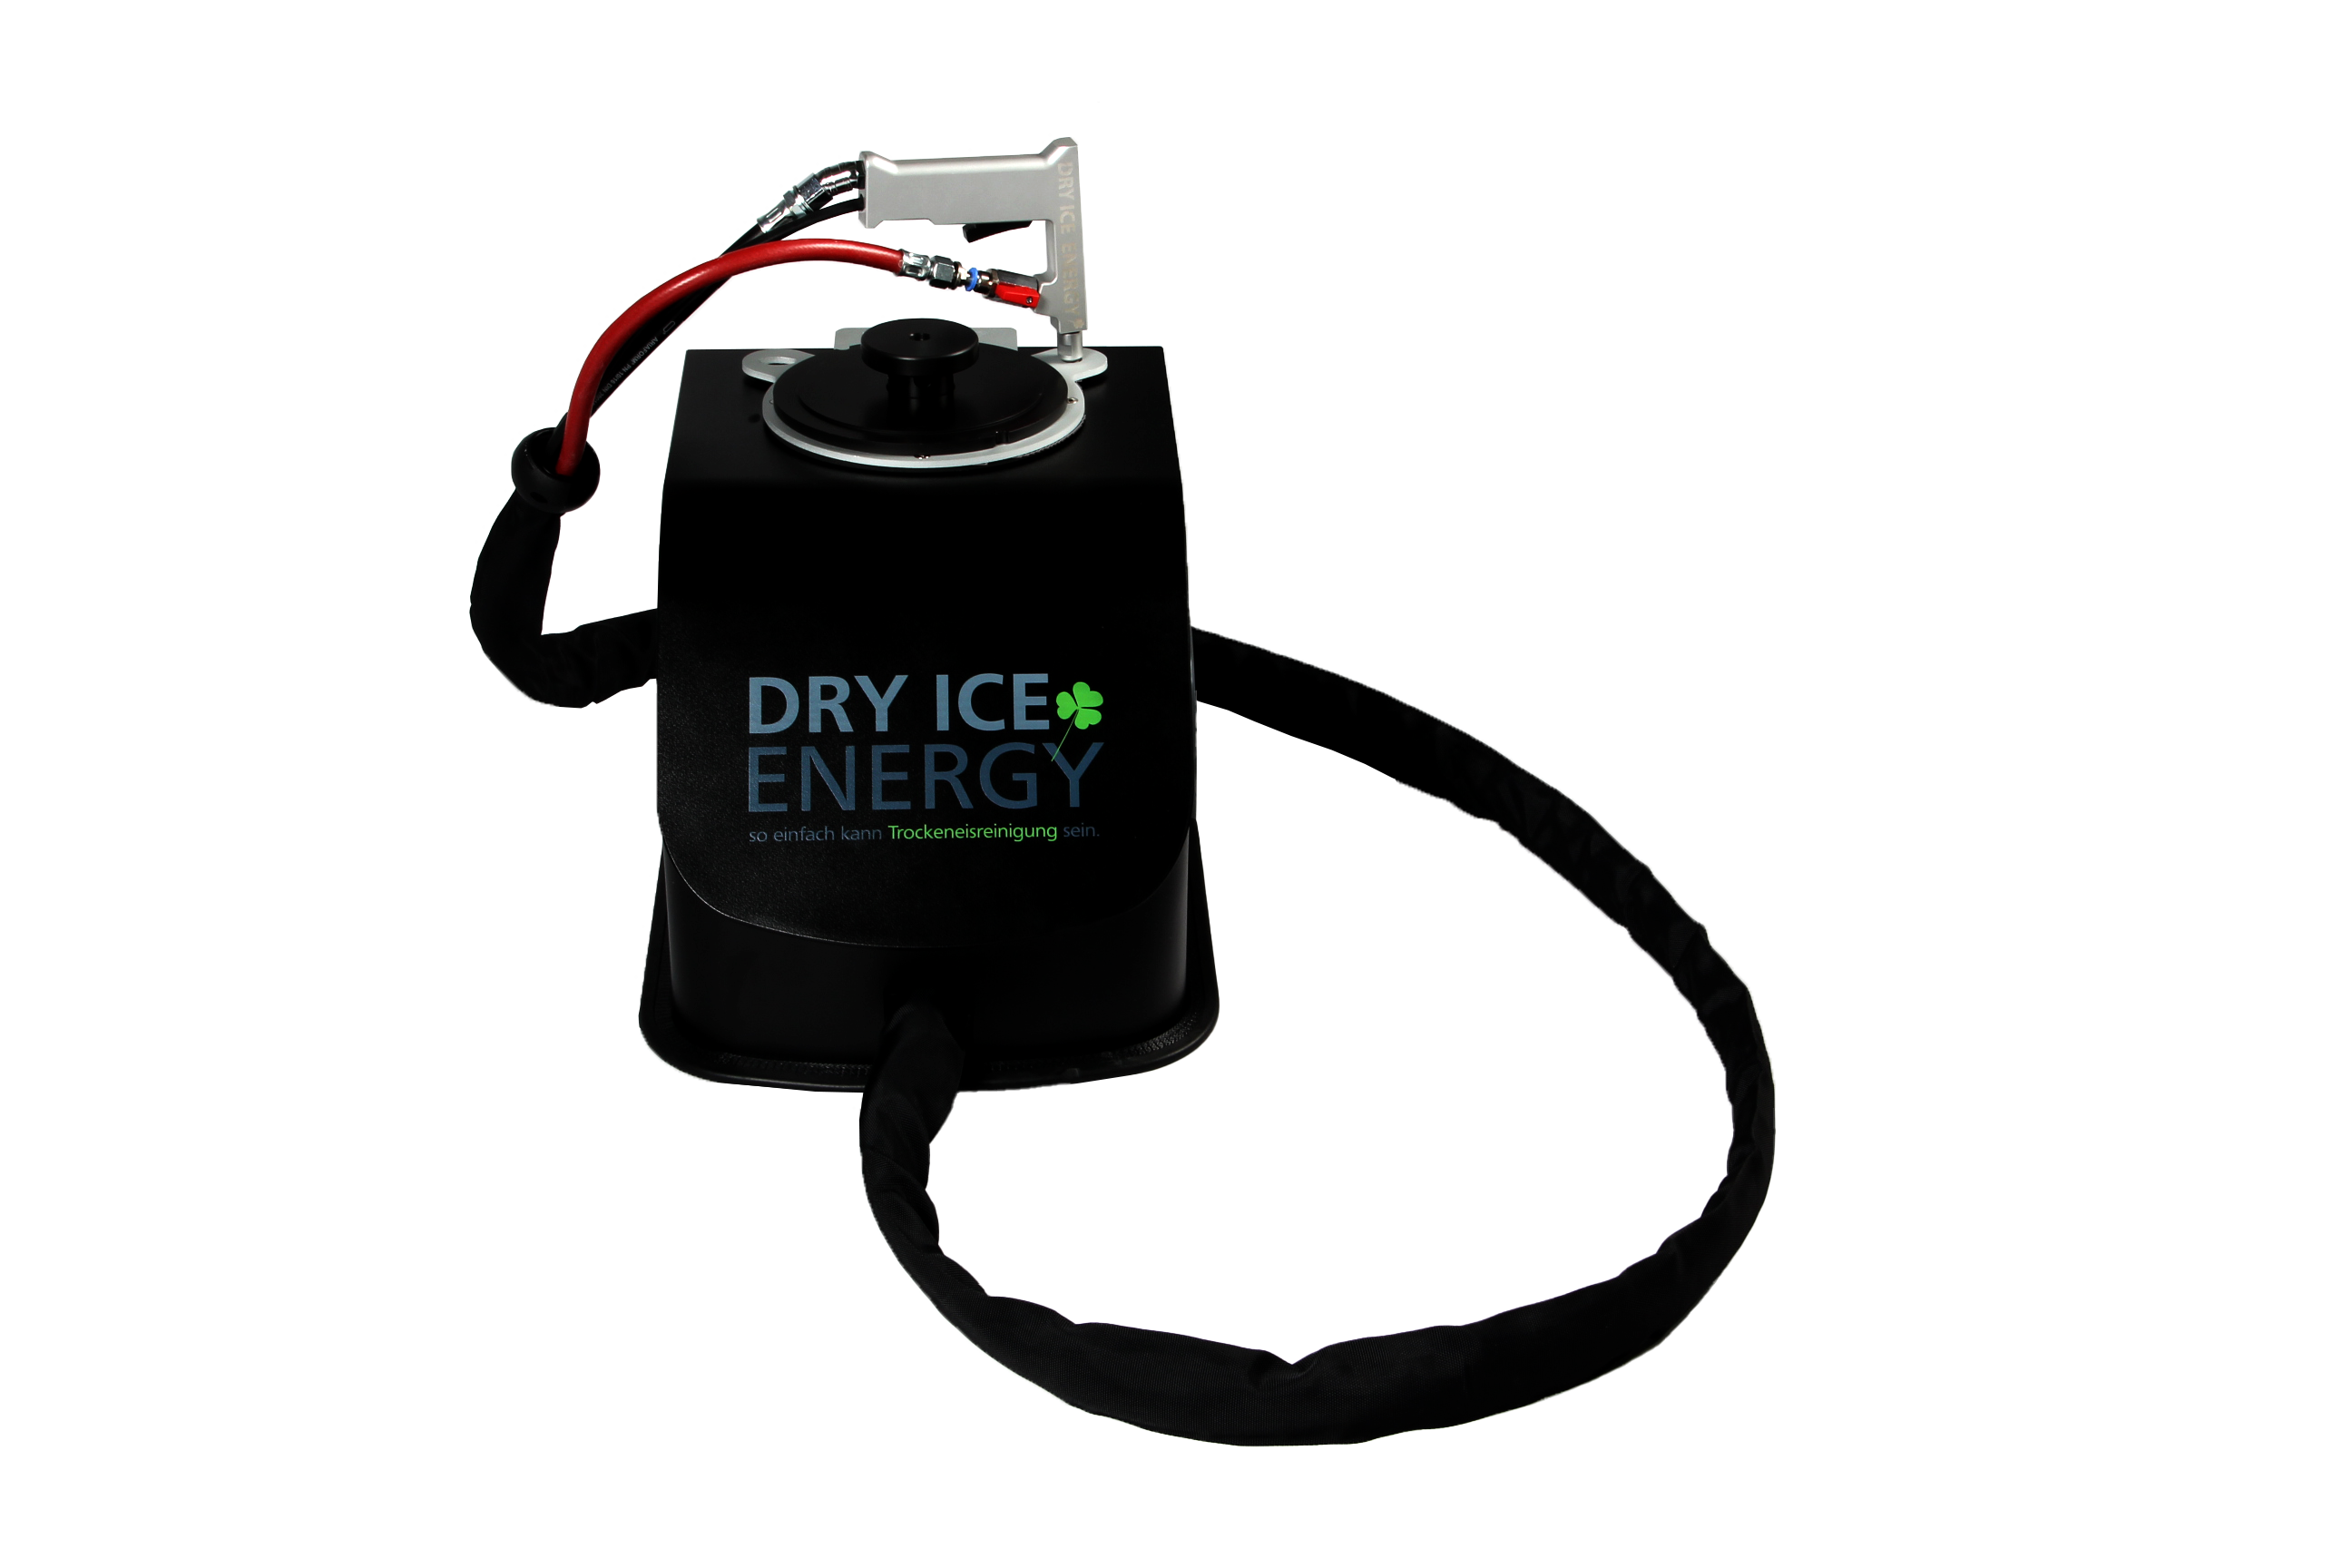 Dry ice blasting machine and dry ice from Dry Ice Energy